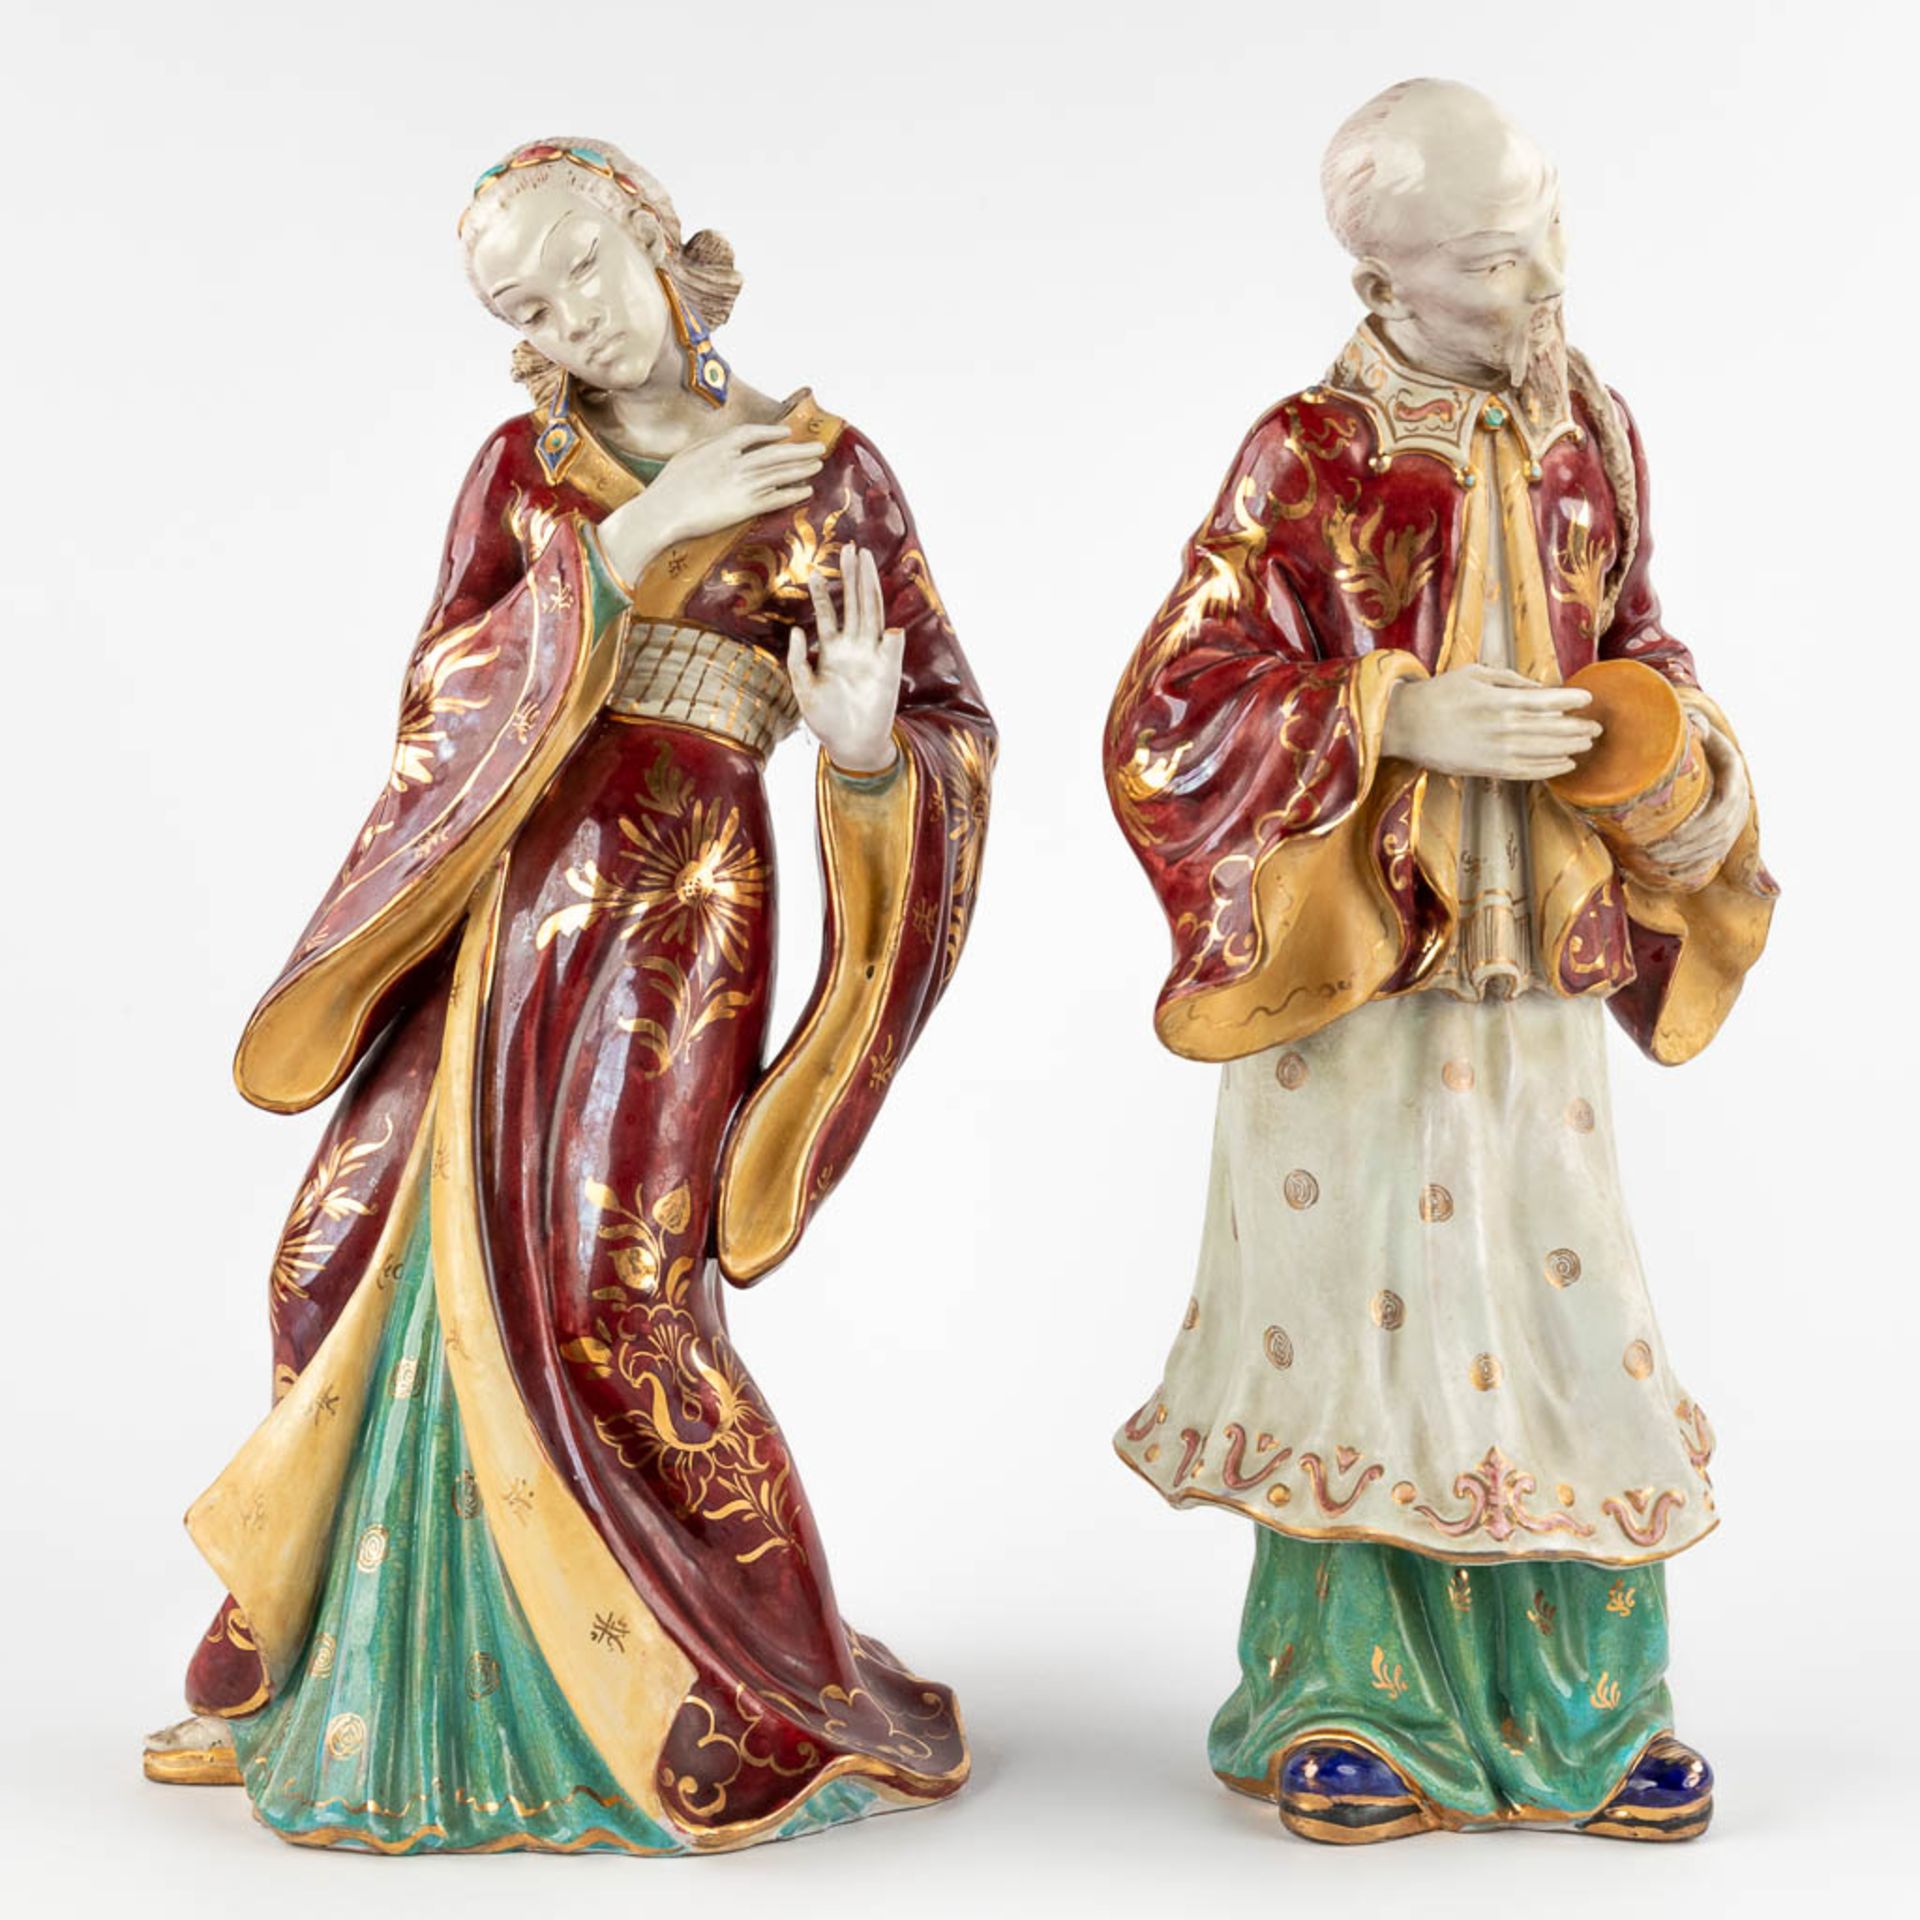 Eugenio PATTARINO (1885-1971) 'Asian Figurines' glazed terracotta. (D:18 x W:24 x H:46 cm) - Image 3 of 14